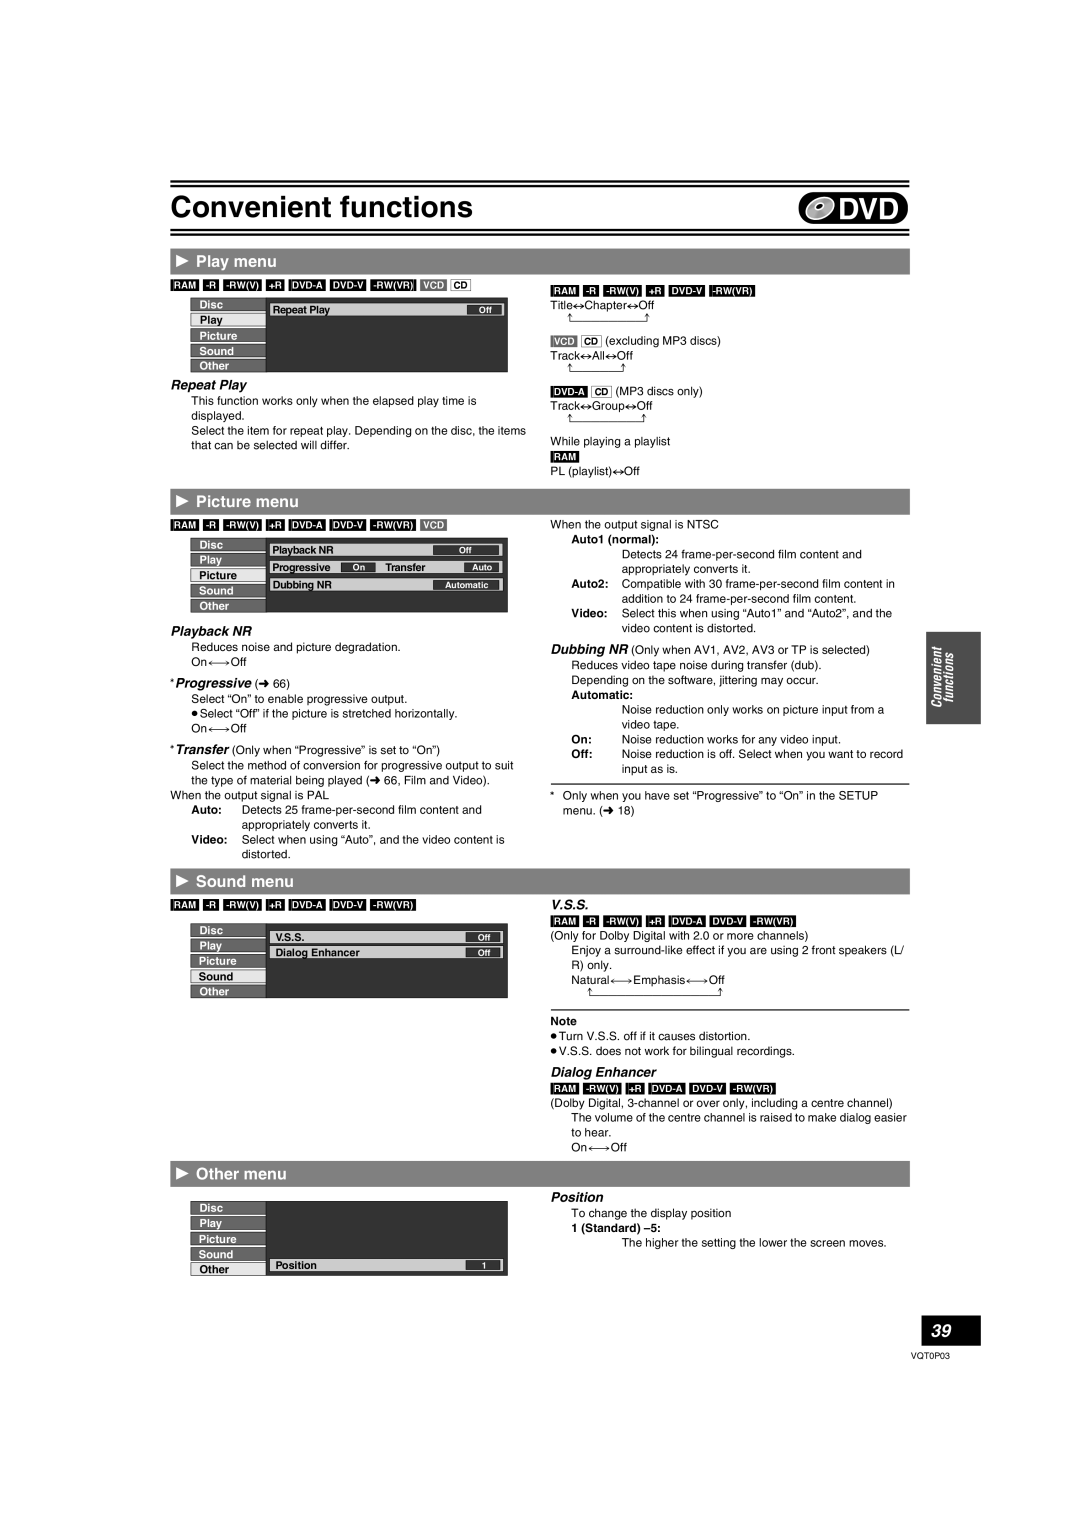 Panasonic DMR-ES30V operating instructions Play menu, Picture menu, Sound menu, Other menu 